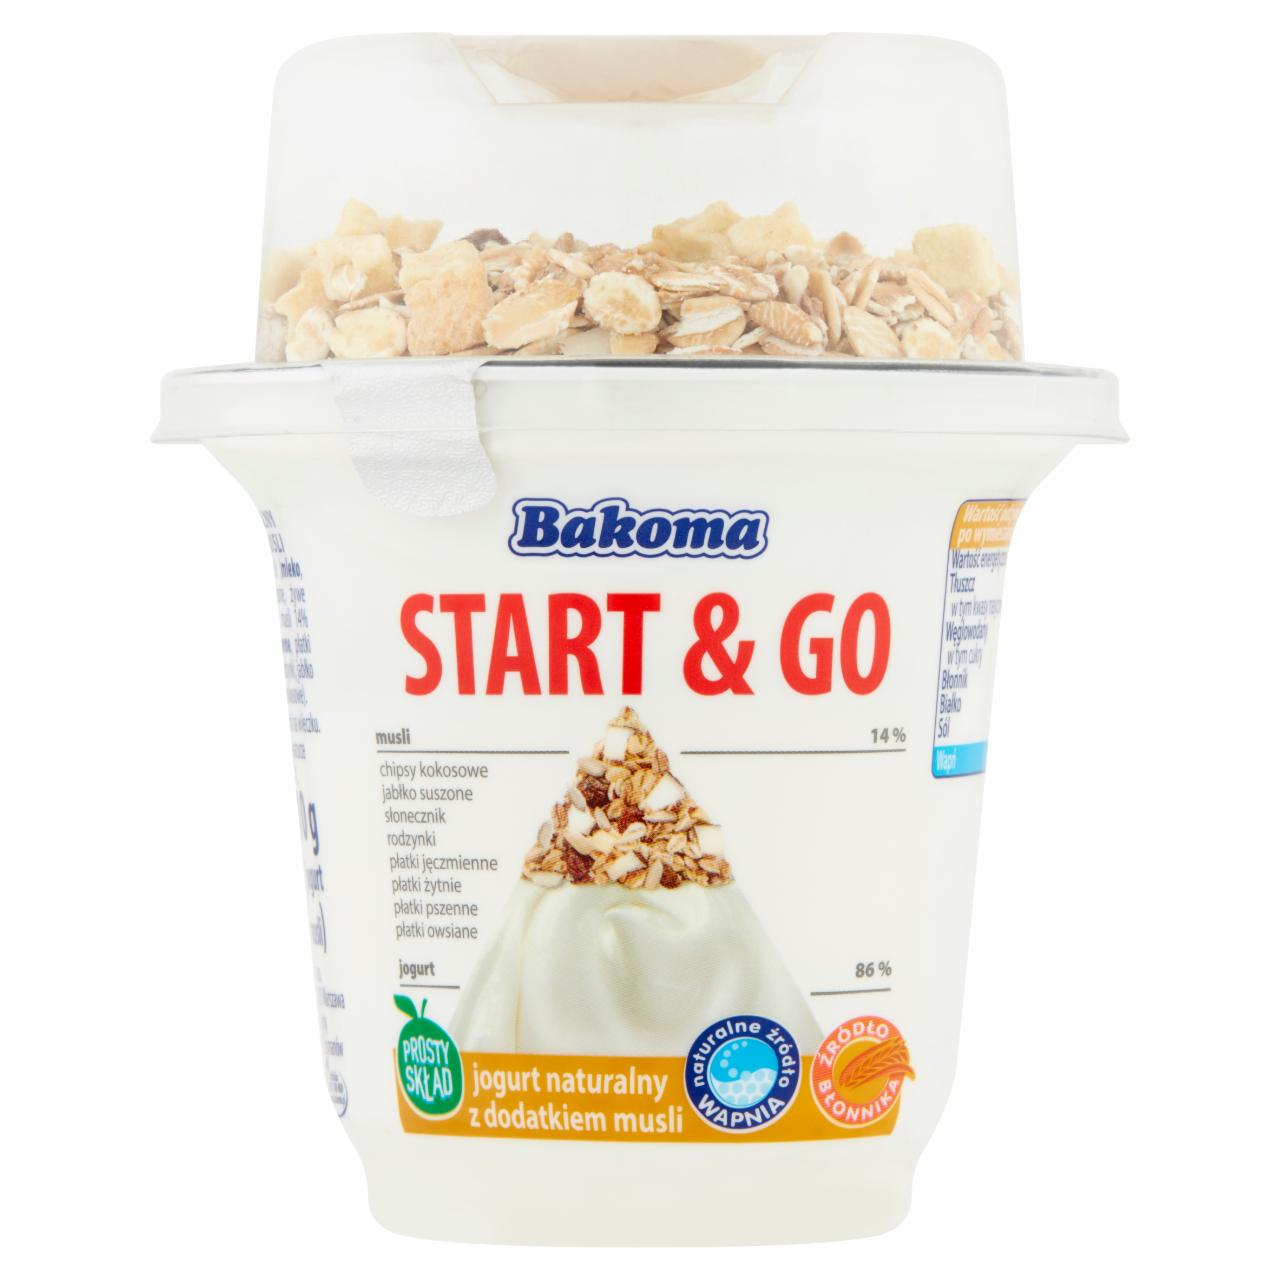 Zdjęcia - Bakoma Start & Go Jogurt naturalny z dodatkiem musli 210 g